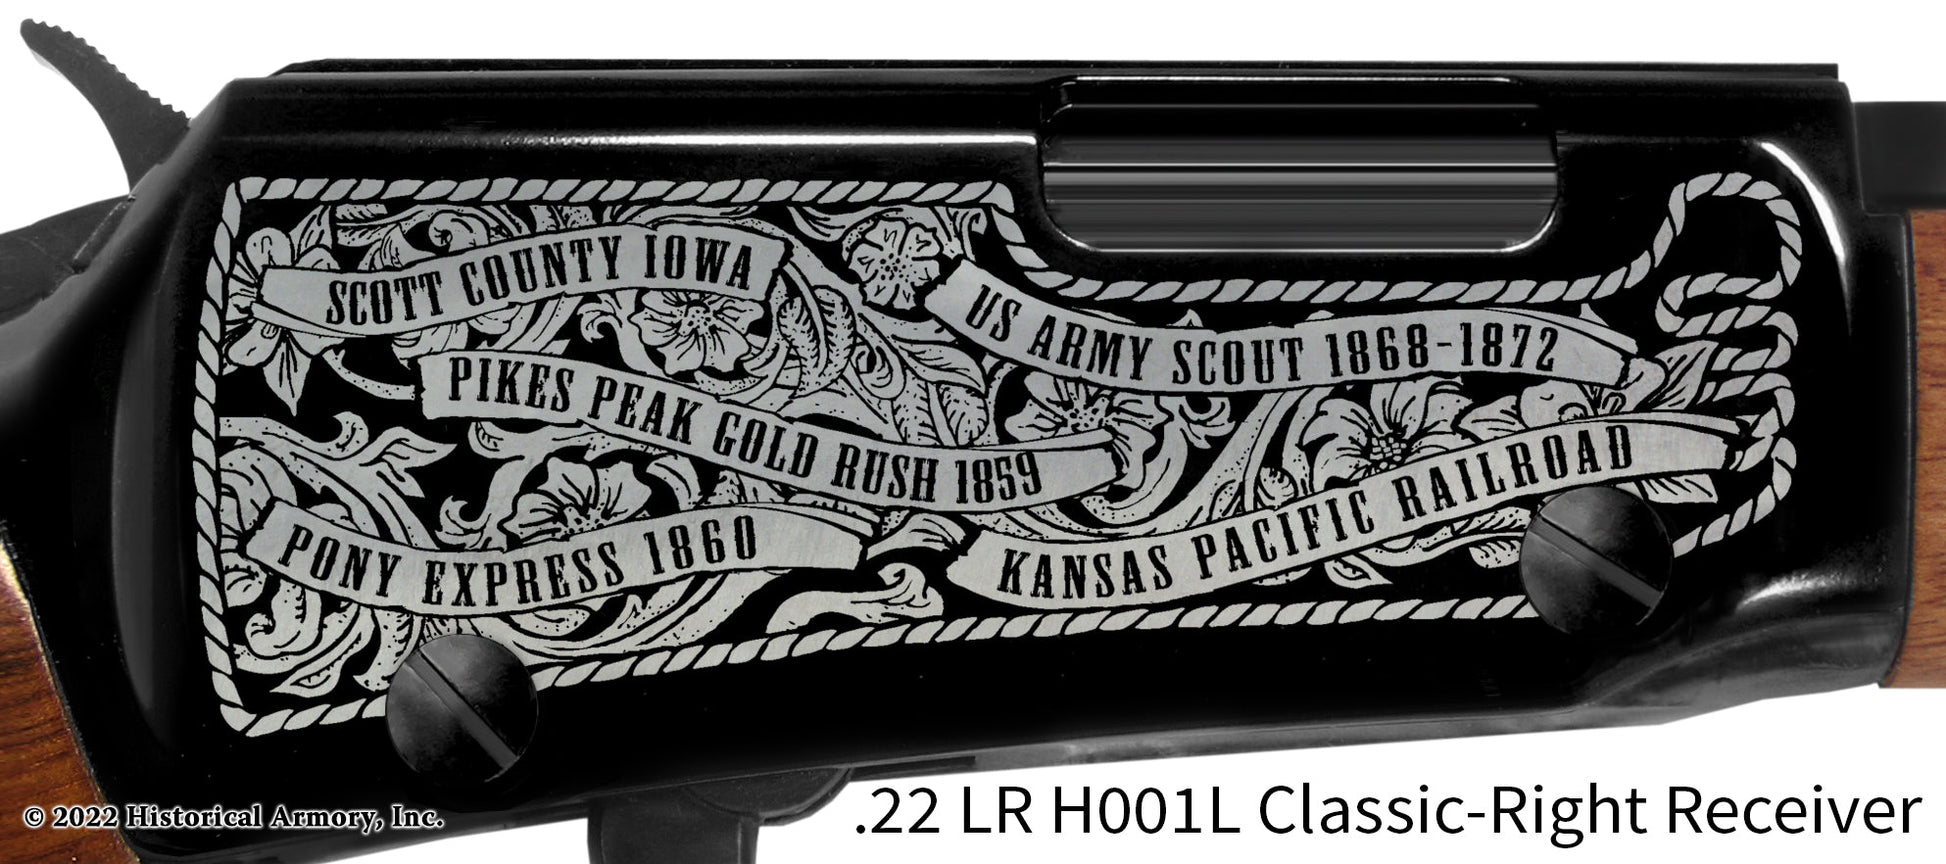 Buffalo Bill Cody Limited Edition Engraved Rifle